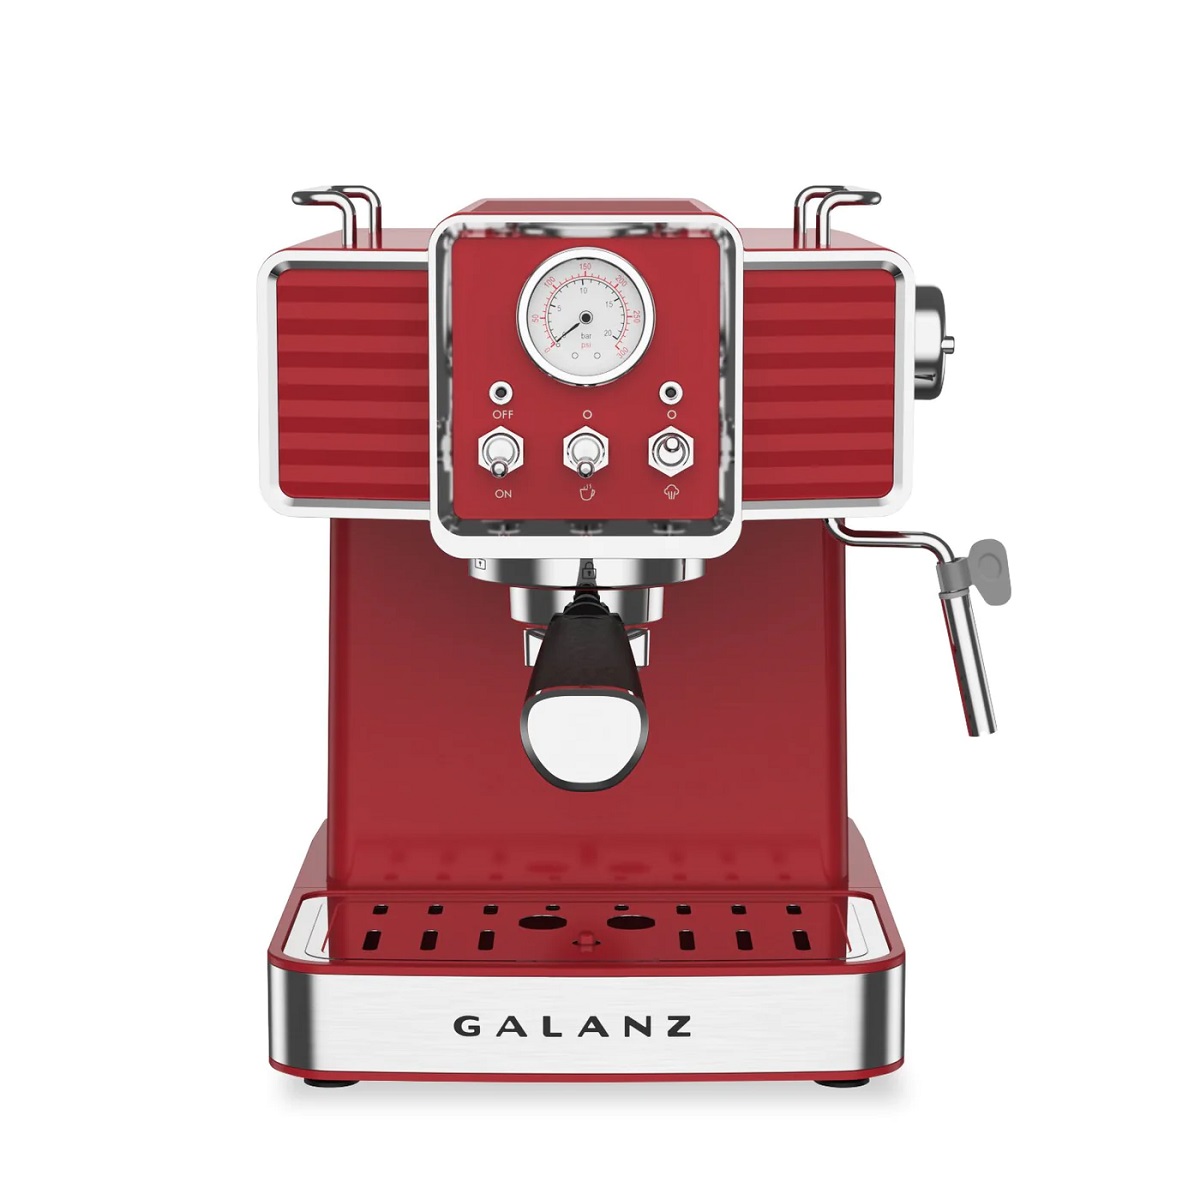 How To Use The Galanz Espresso Machine